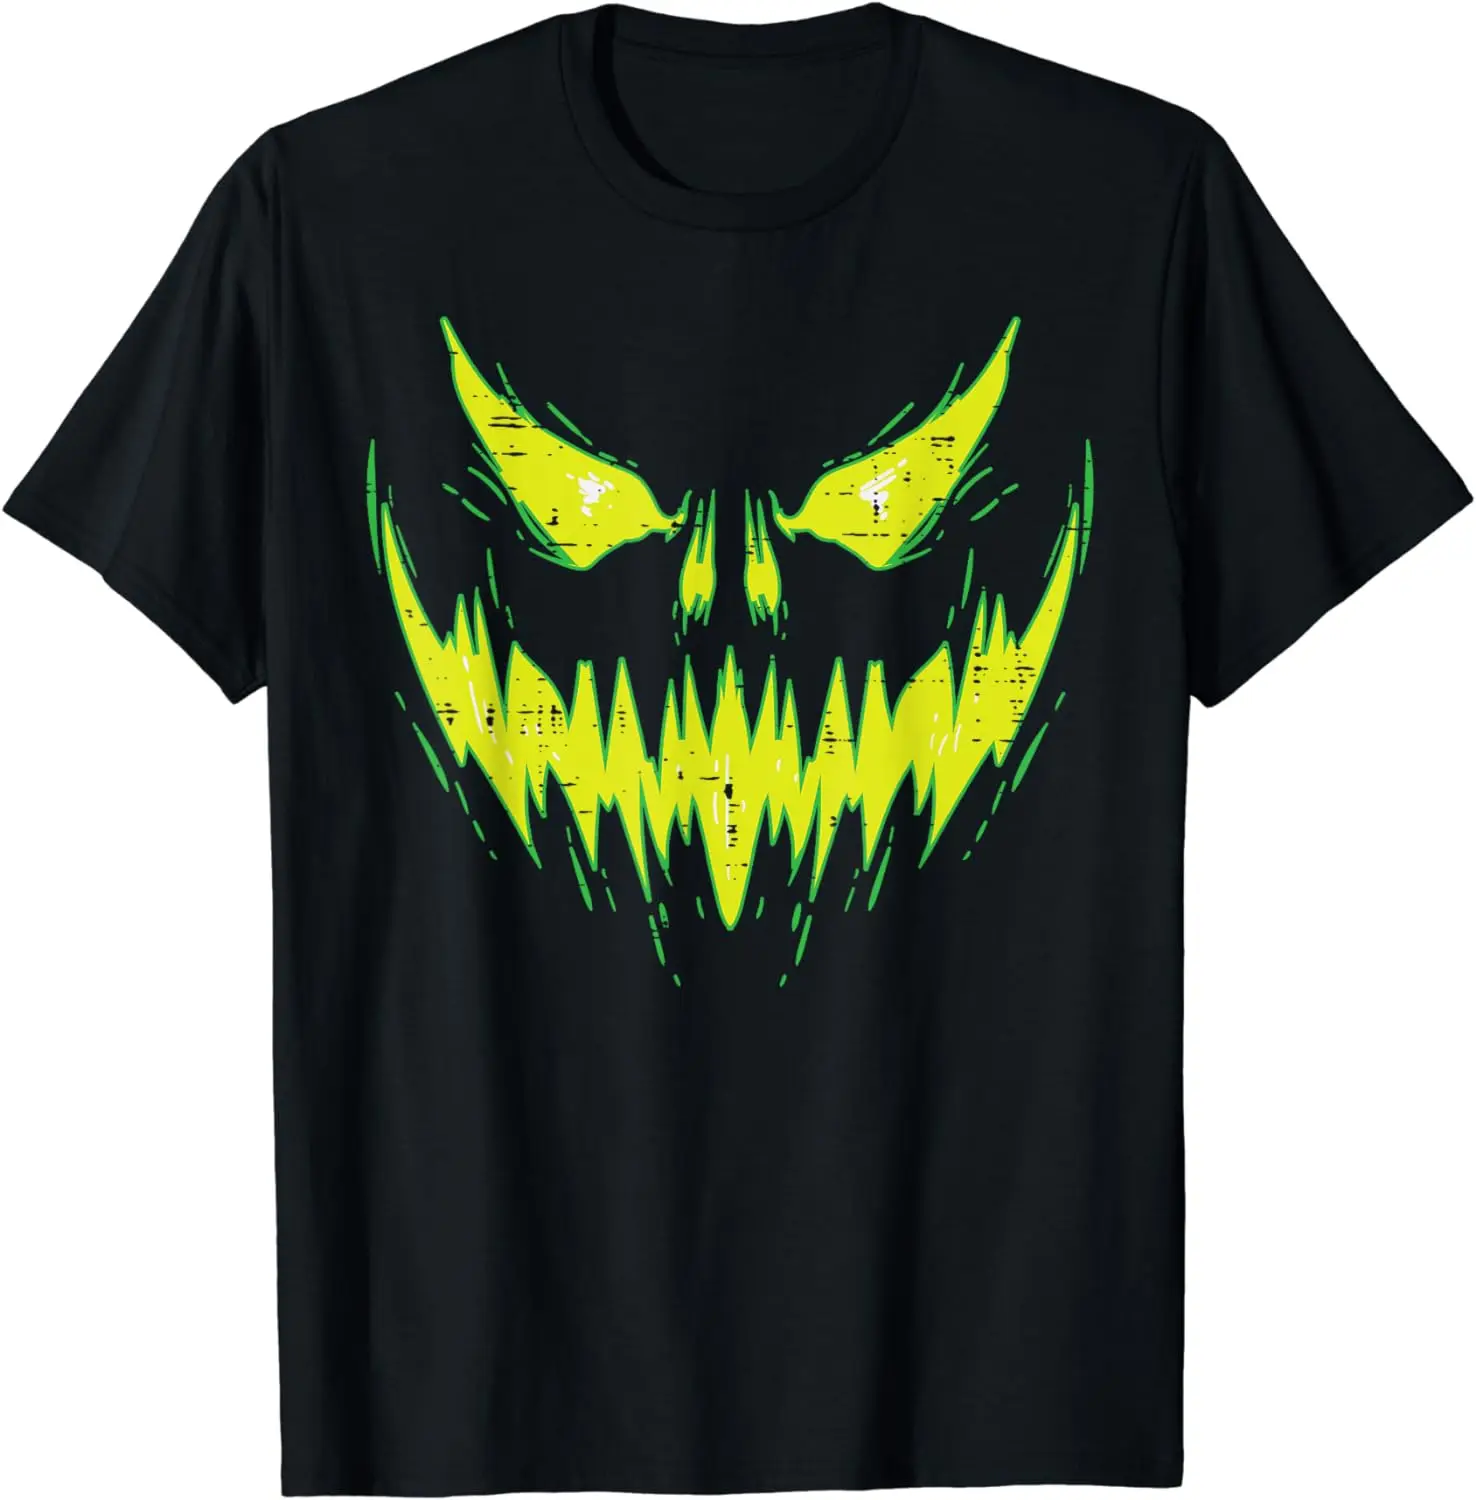 

Neon Green Scary Pumpkin Jack O Lantern Face Halloween Men Boys Kids T-Shirt for Men Women Teenagers Casual Daily T Shirt